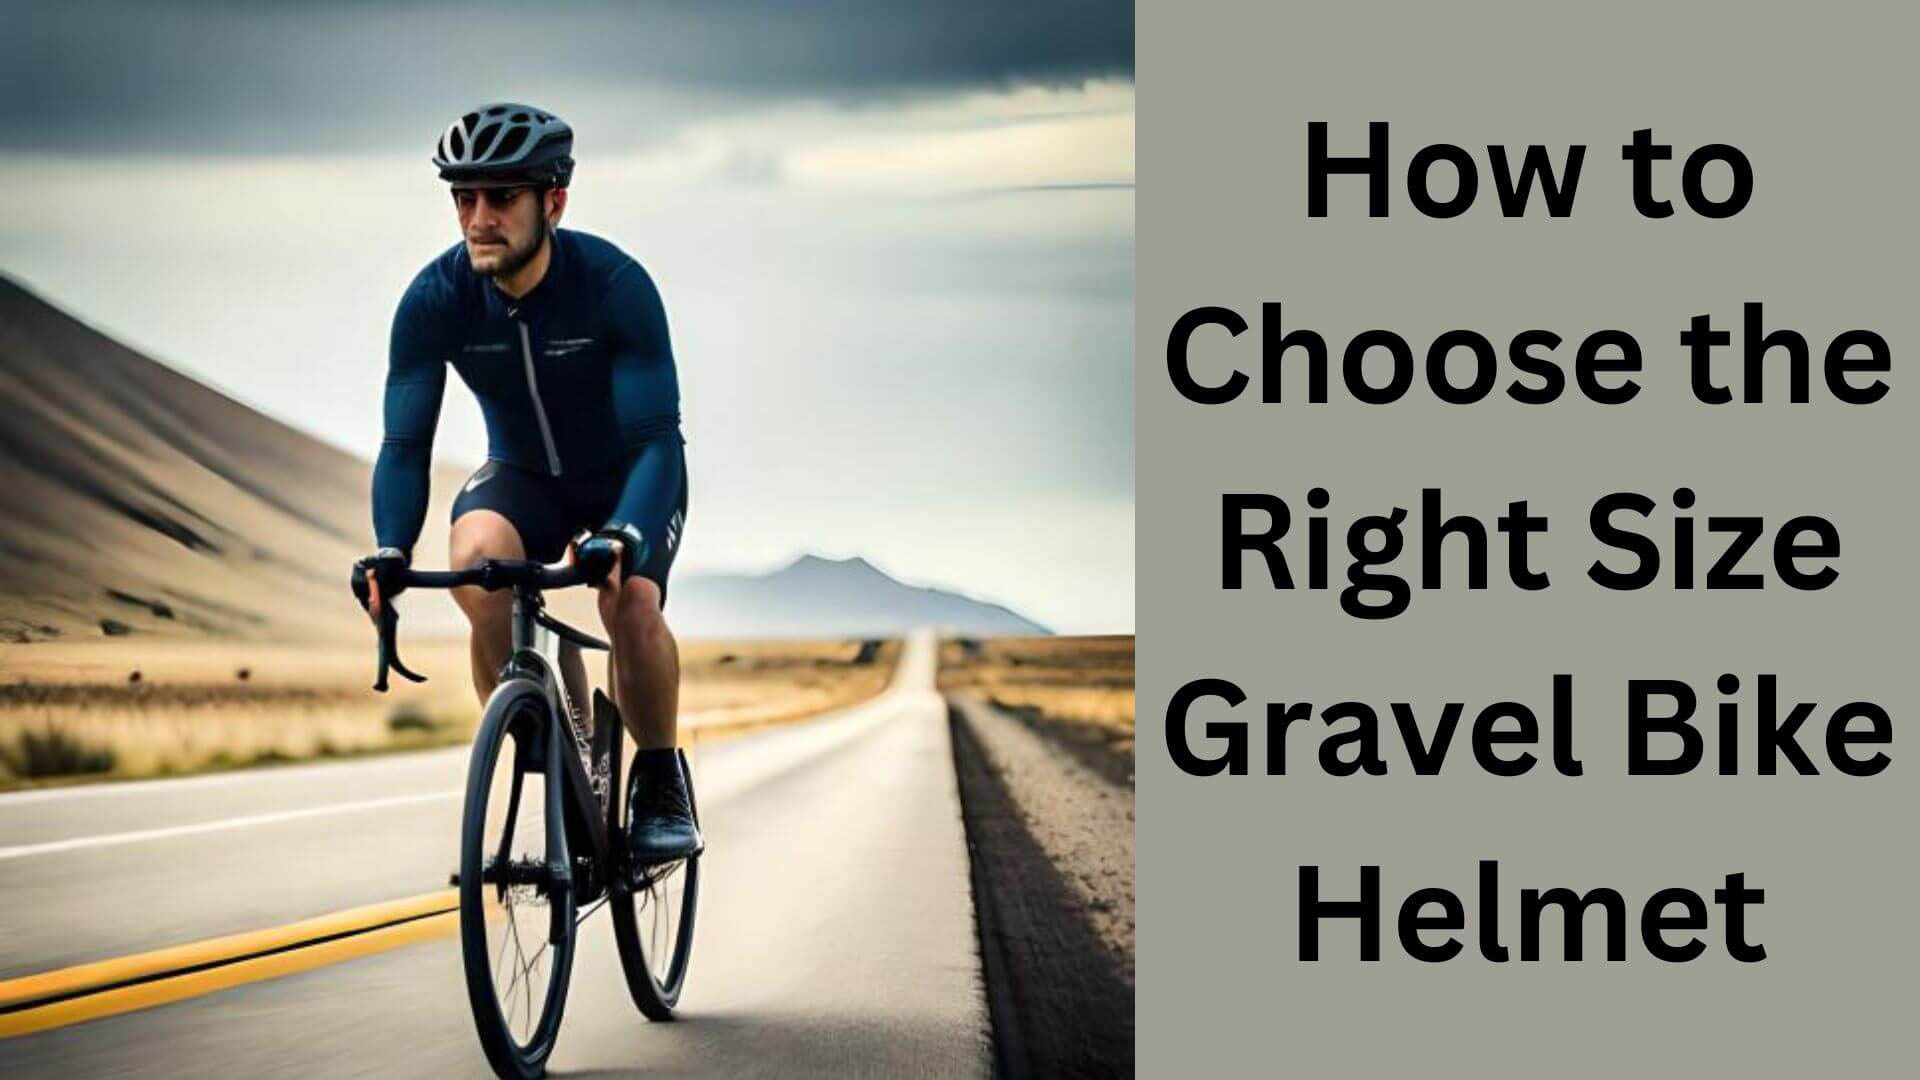 How To Choose the Right Size Gravel Bike Helmet?